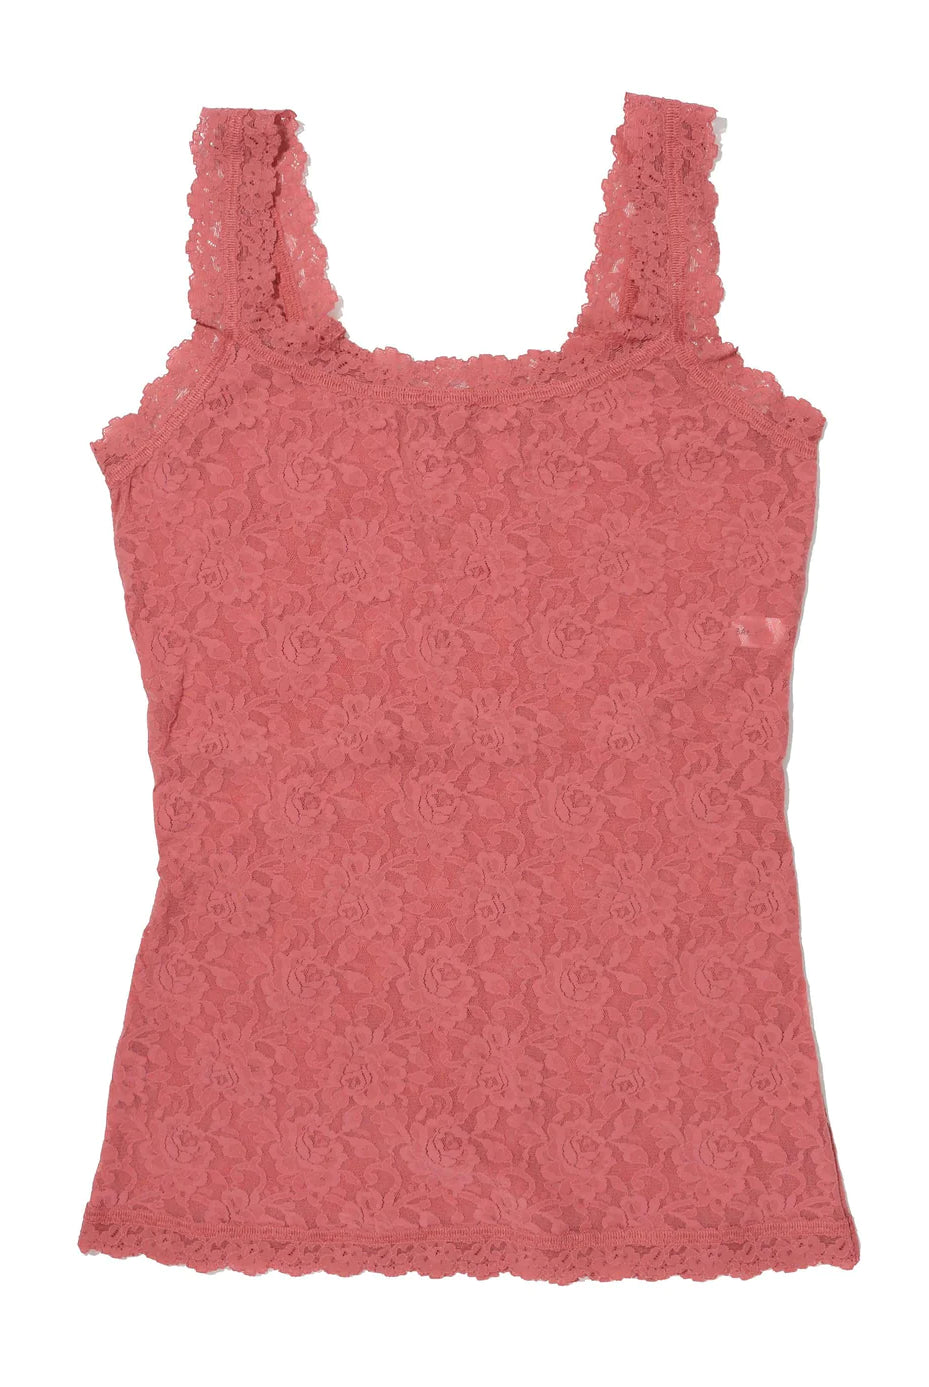 Signature Lace Classic Cami - Pink Sands - Flirt! Luxe Lingerie & Sleepwear